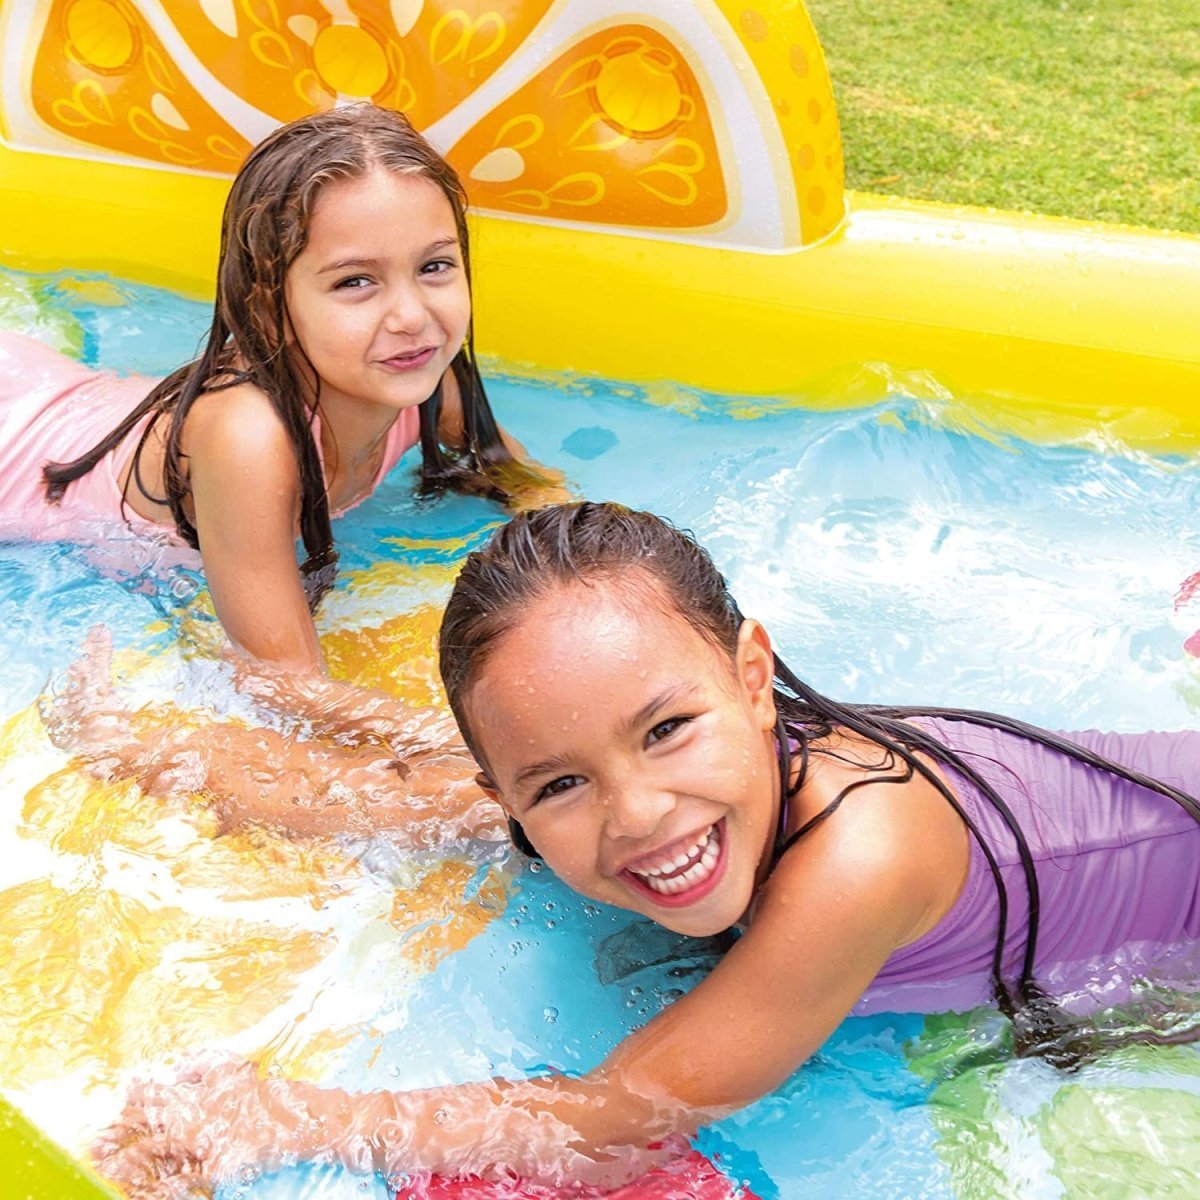 INTEX Fun'N Fruity Inflatable Play Centre Paddling Pool & Water Slide - Little Kids Business